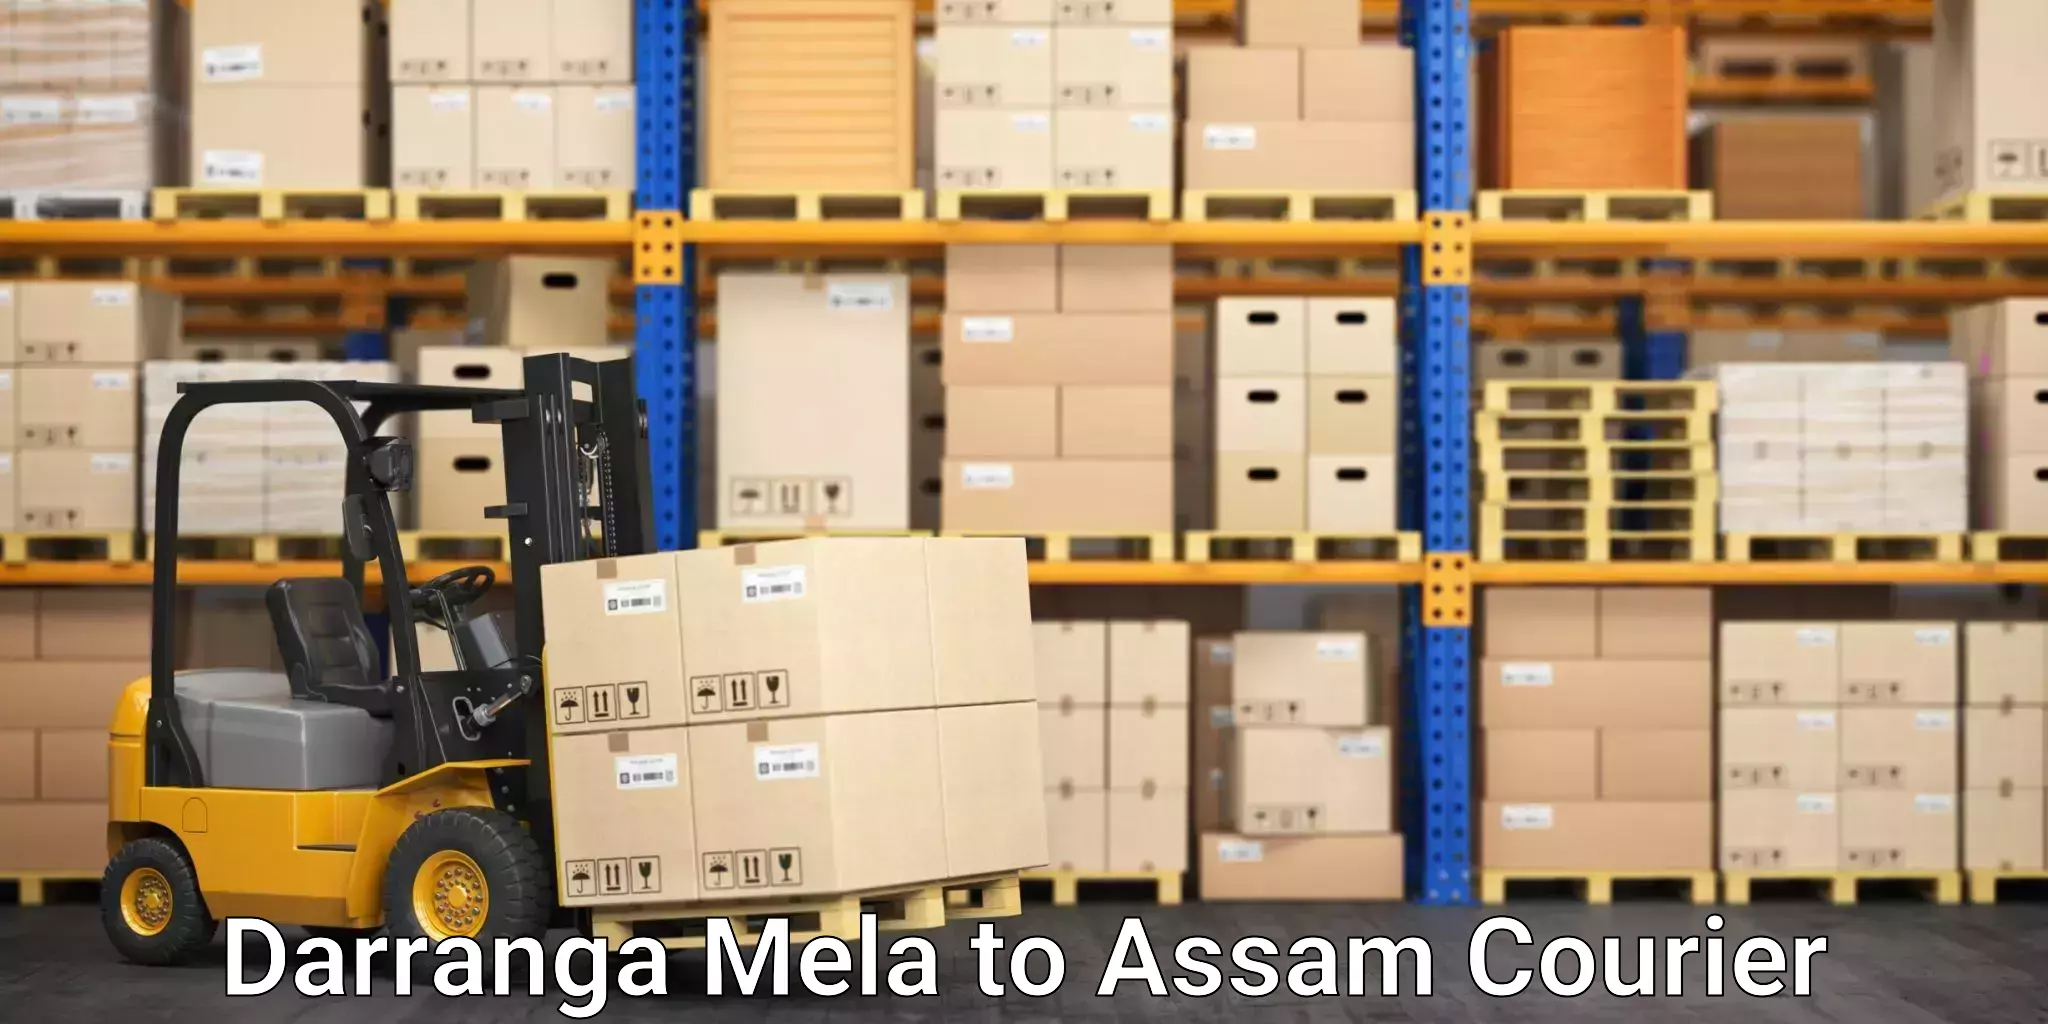 Fragile item shipping Darranga Mela to Lala Assam